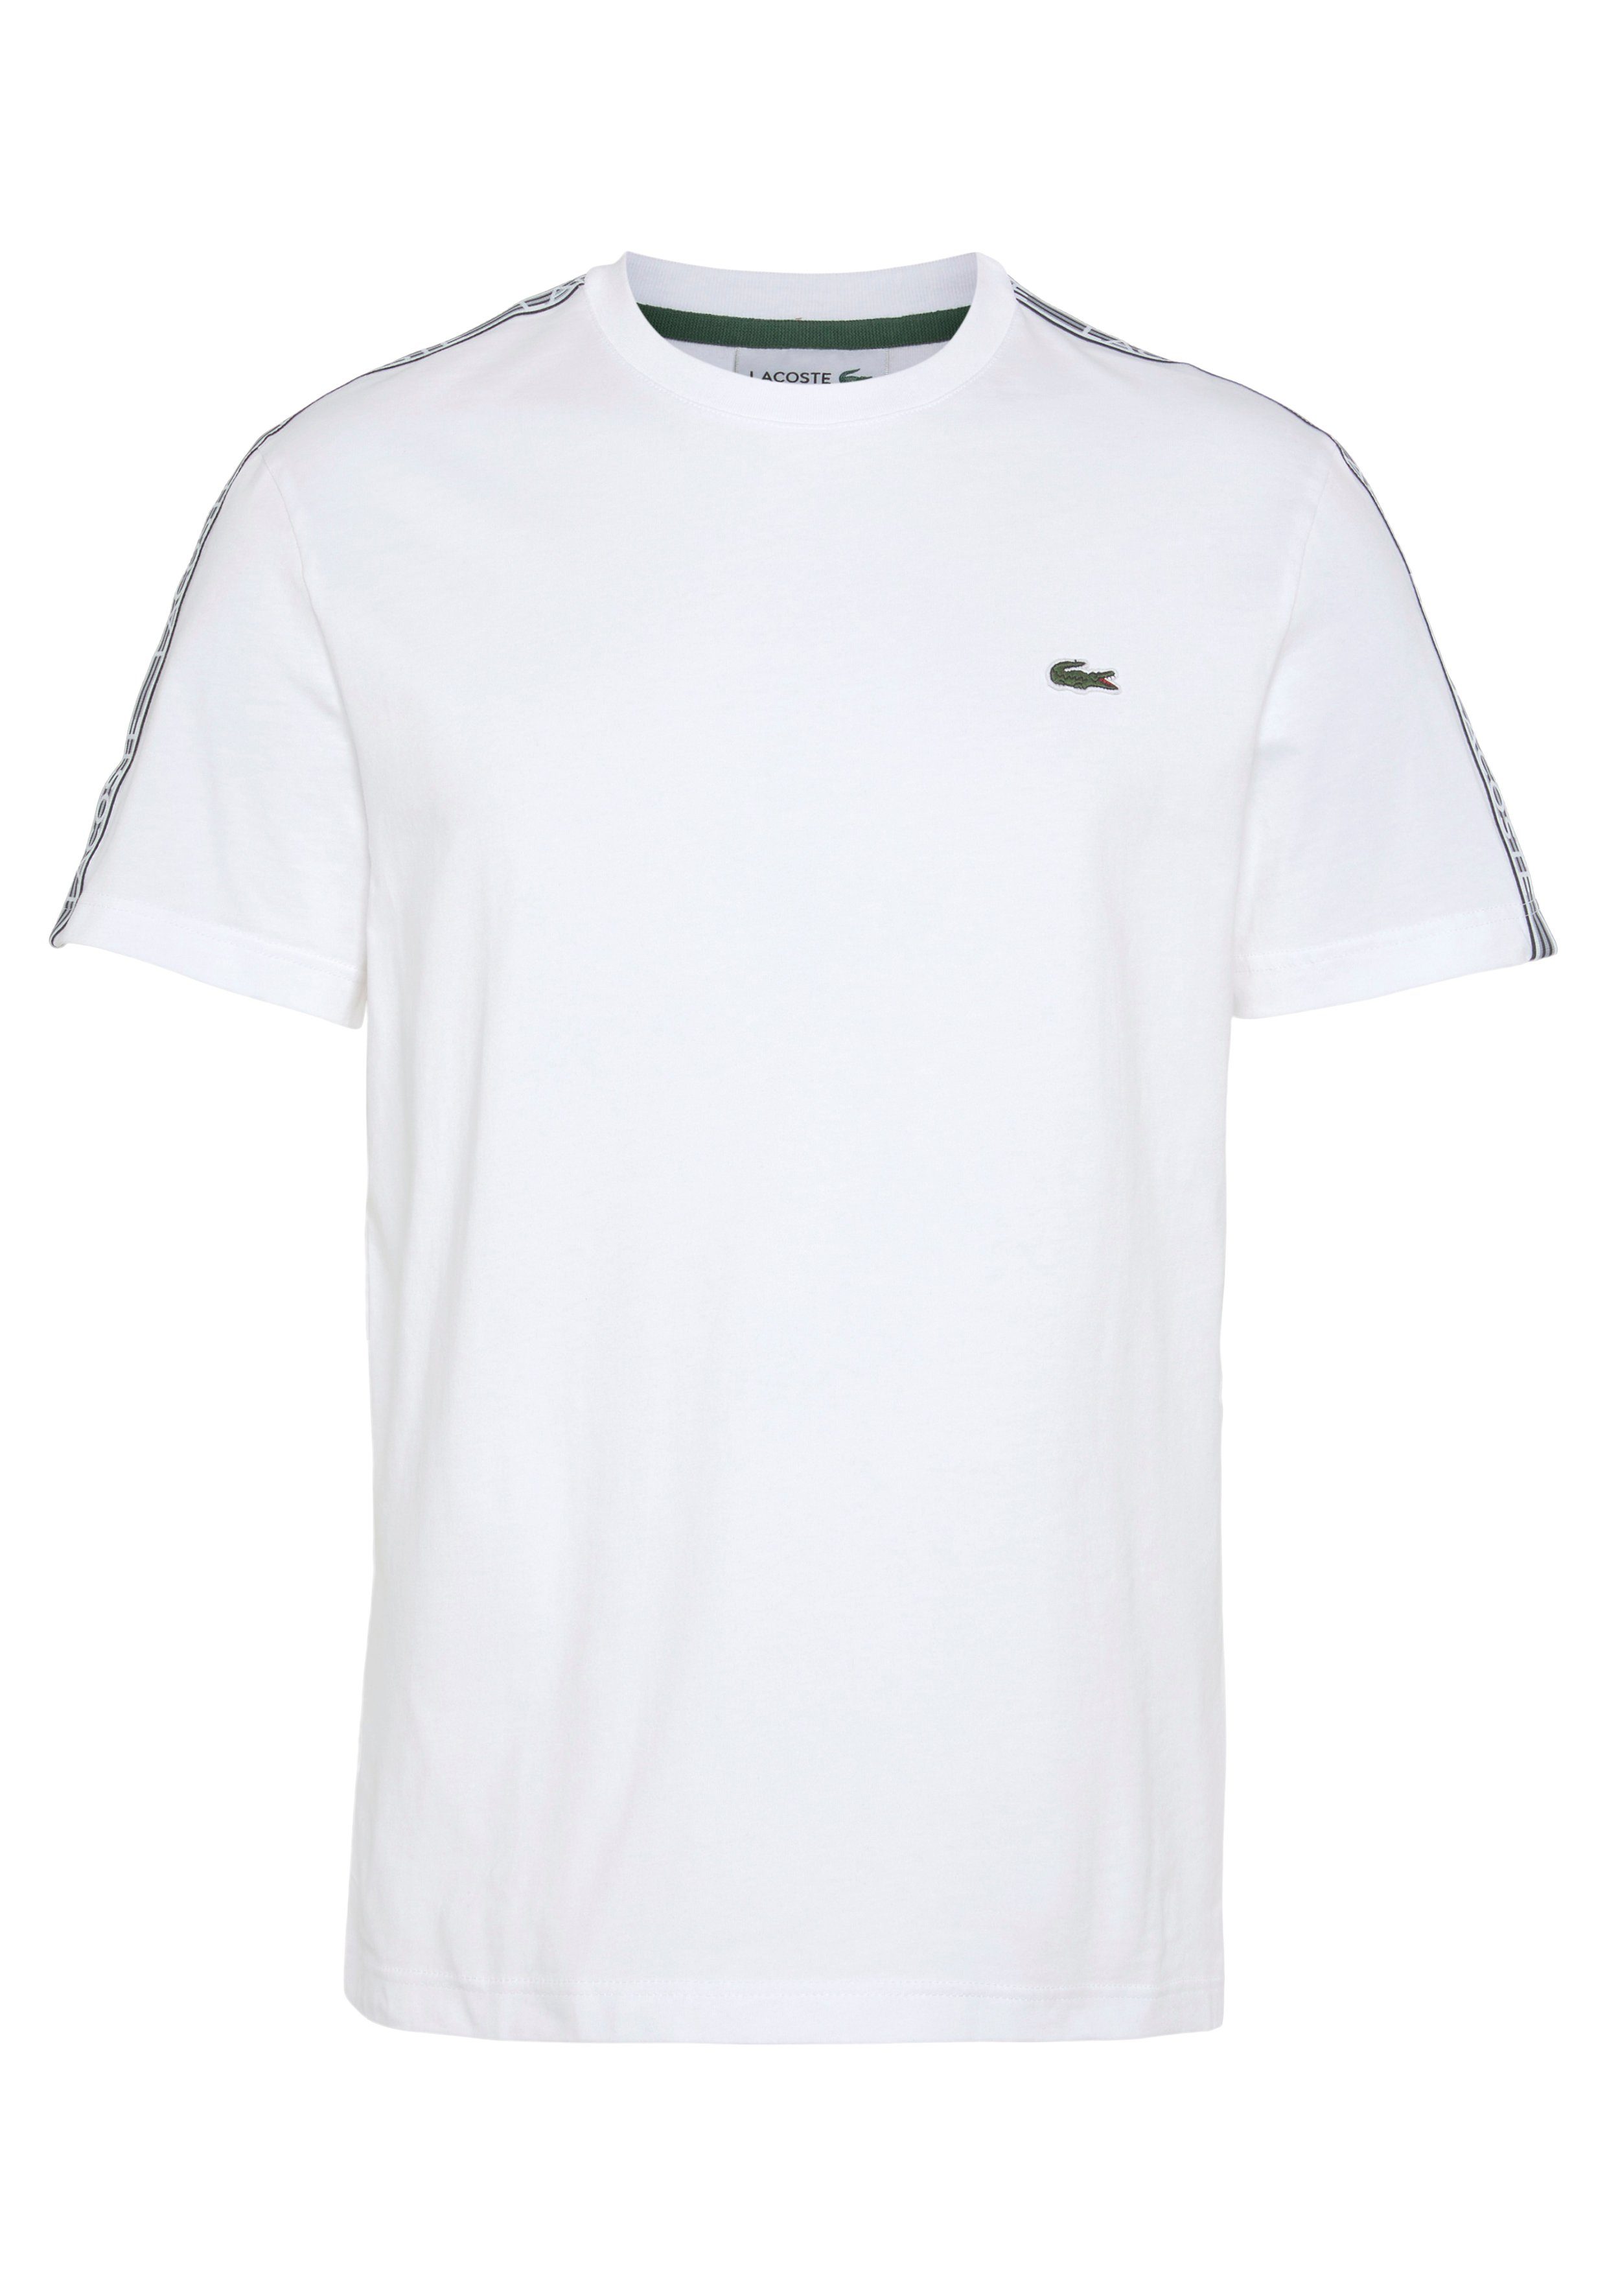 T-Shirt an mit den white Kontrastband Schultern beschriftetem Lacoste